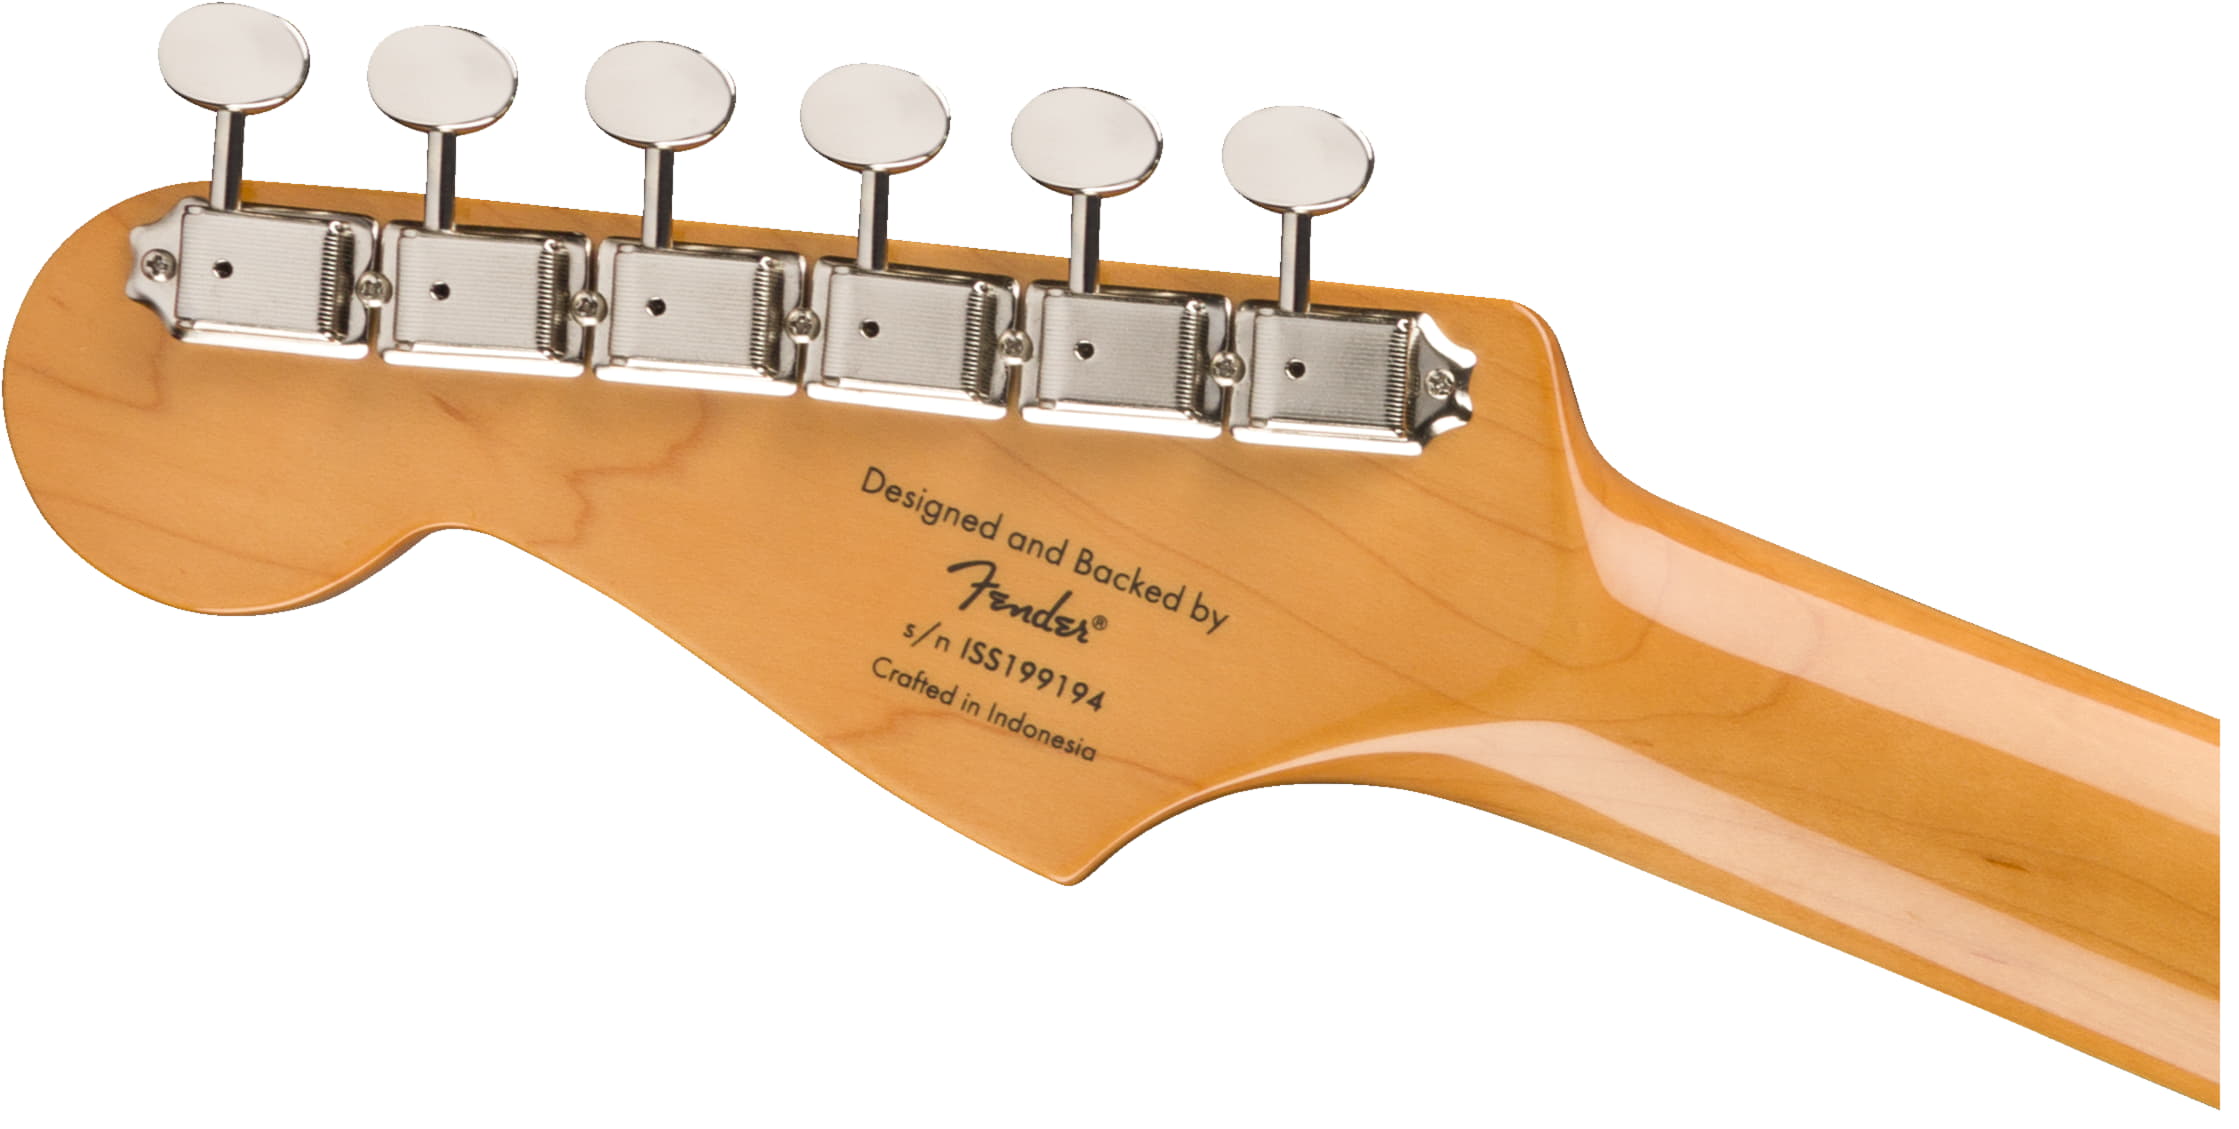 Fender Squier Classic Vibe 60s Strat LRL LPB по цене 70 400 ₽